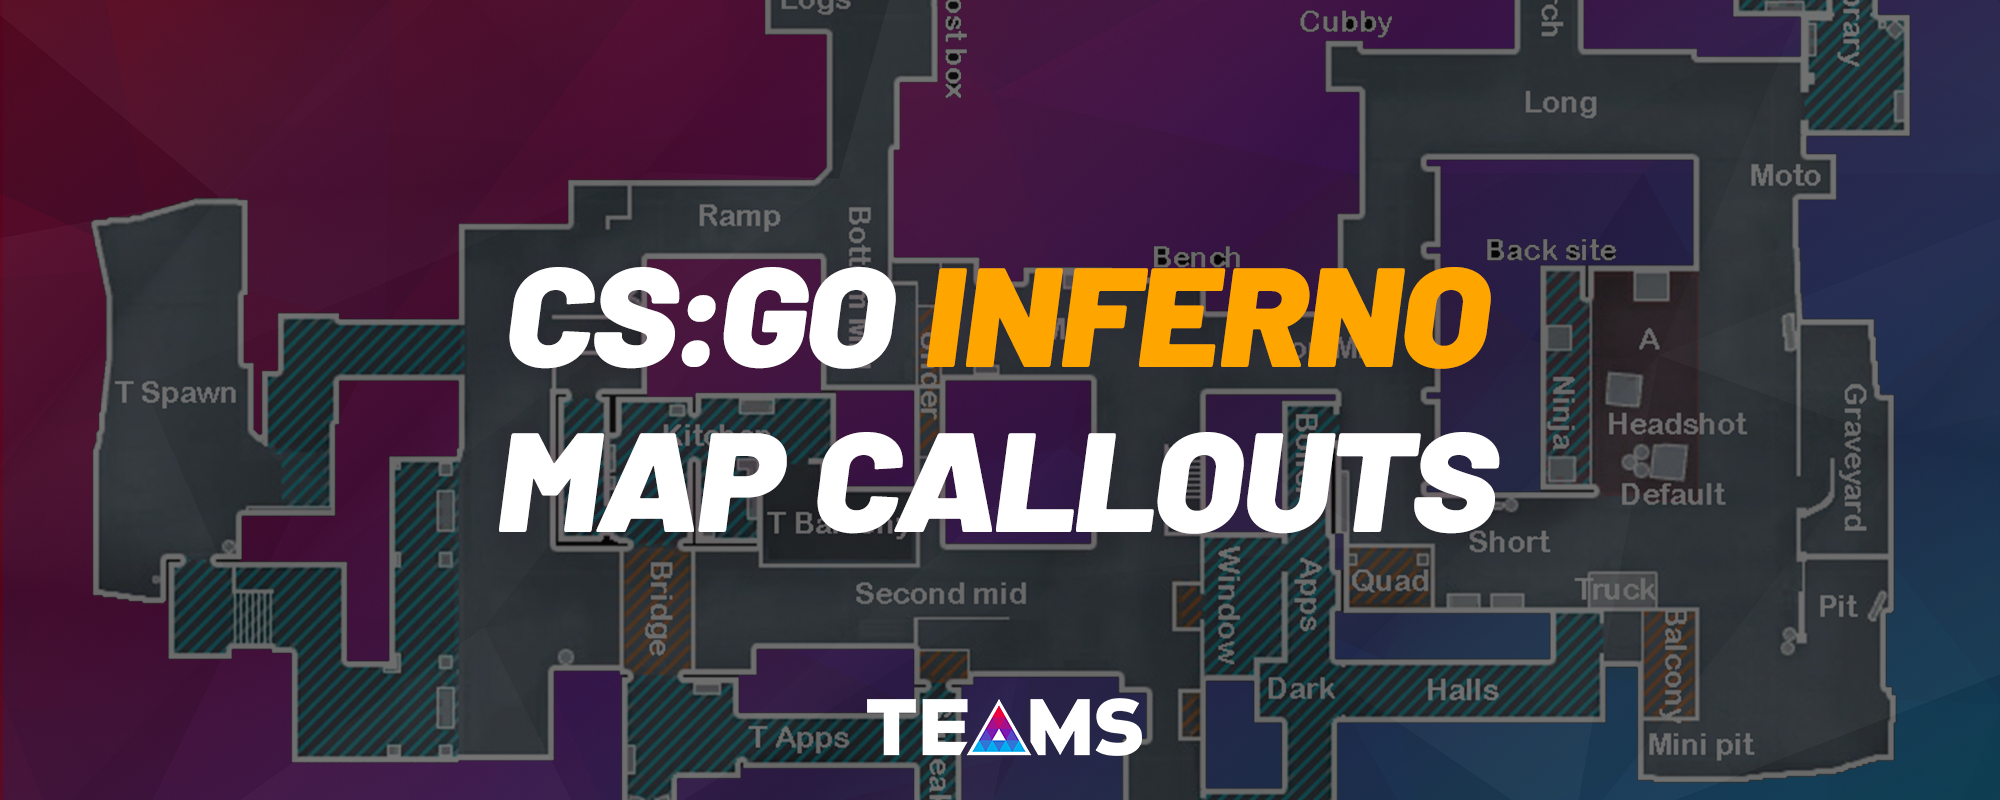 Csgo Map Callouts Inferno 